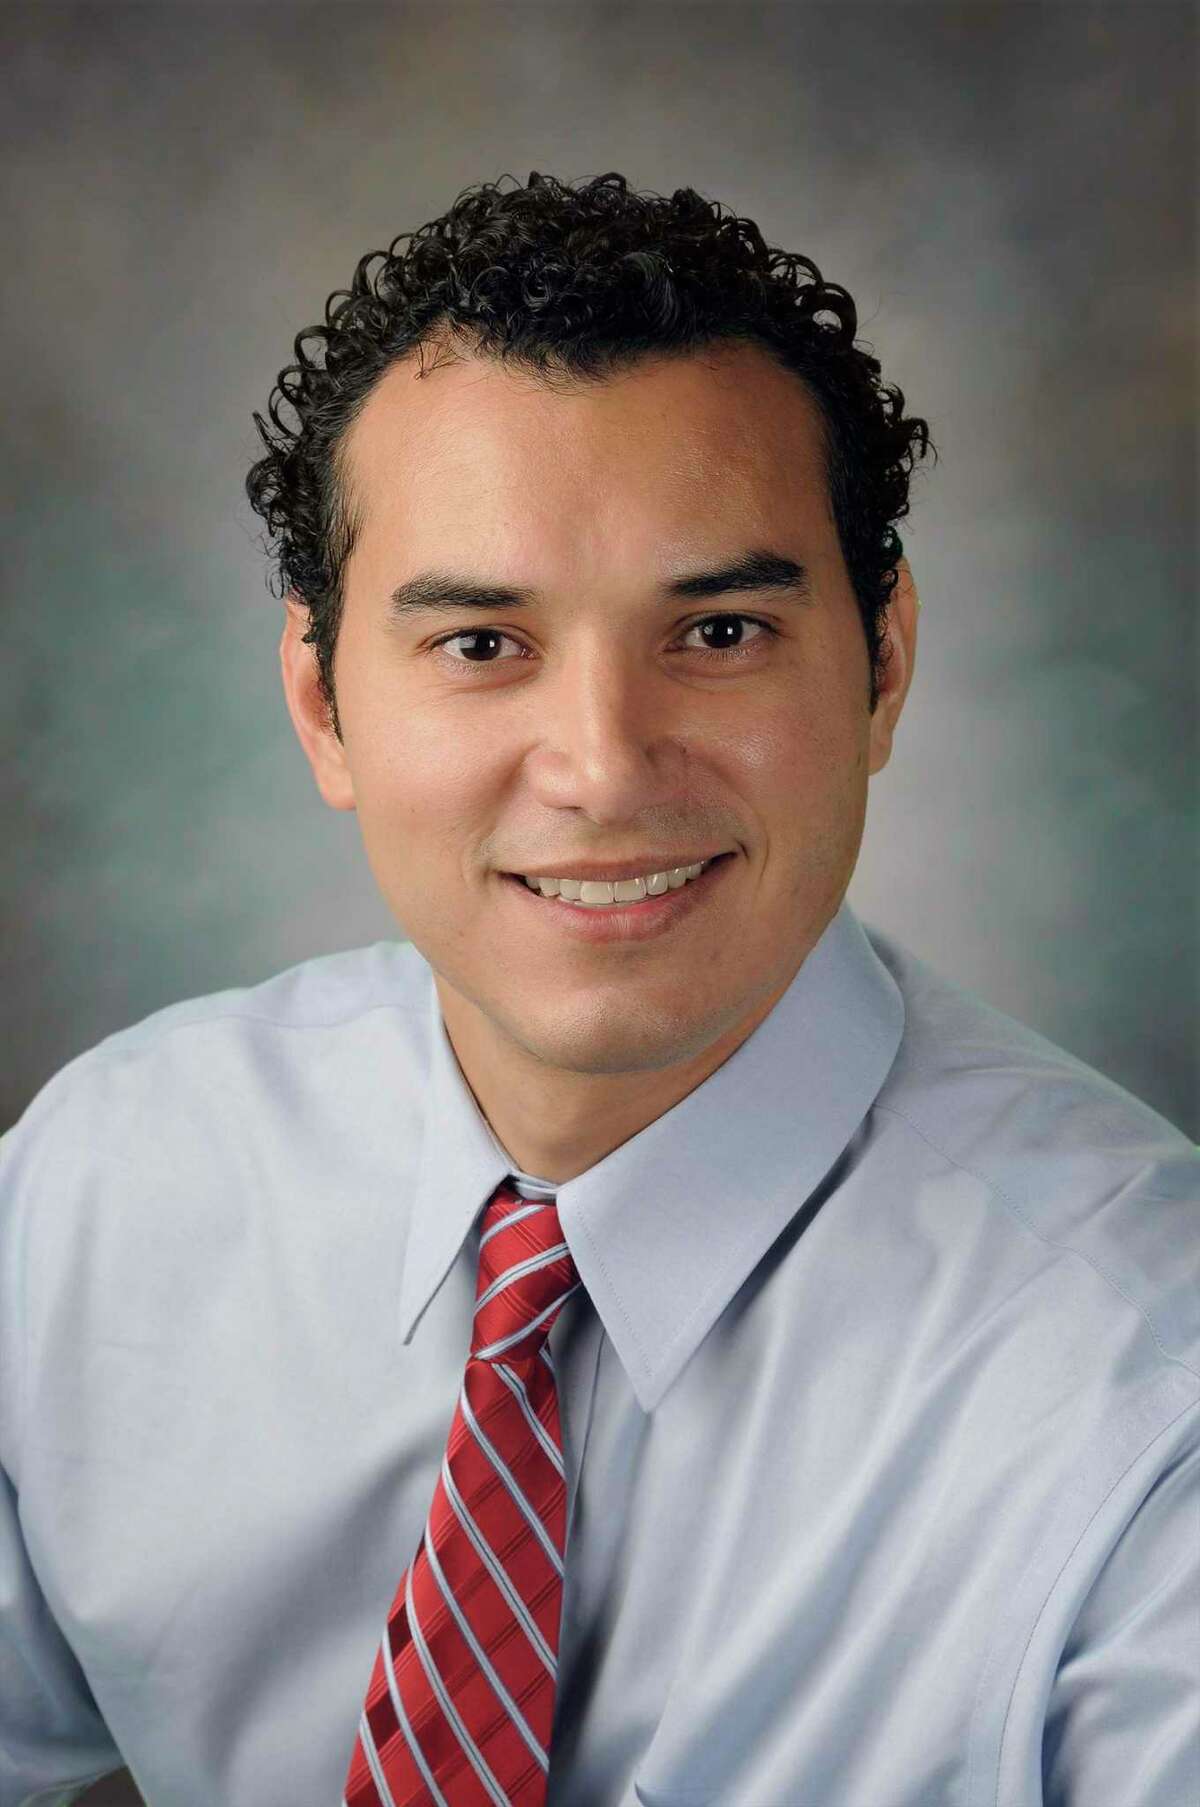 Dr. Alvaro Moreira is an assistant professor of pediatrics at UT Health San Antonio Long School of Medicine.